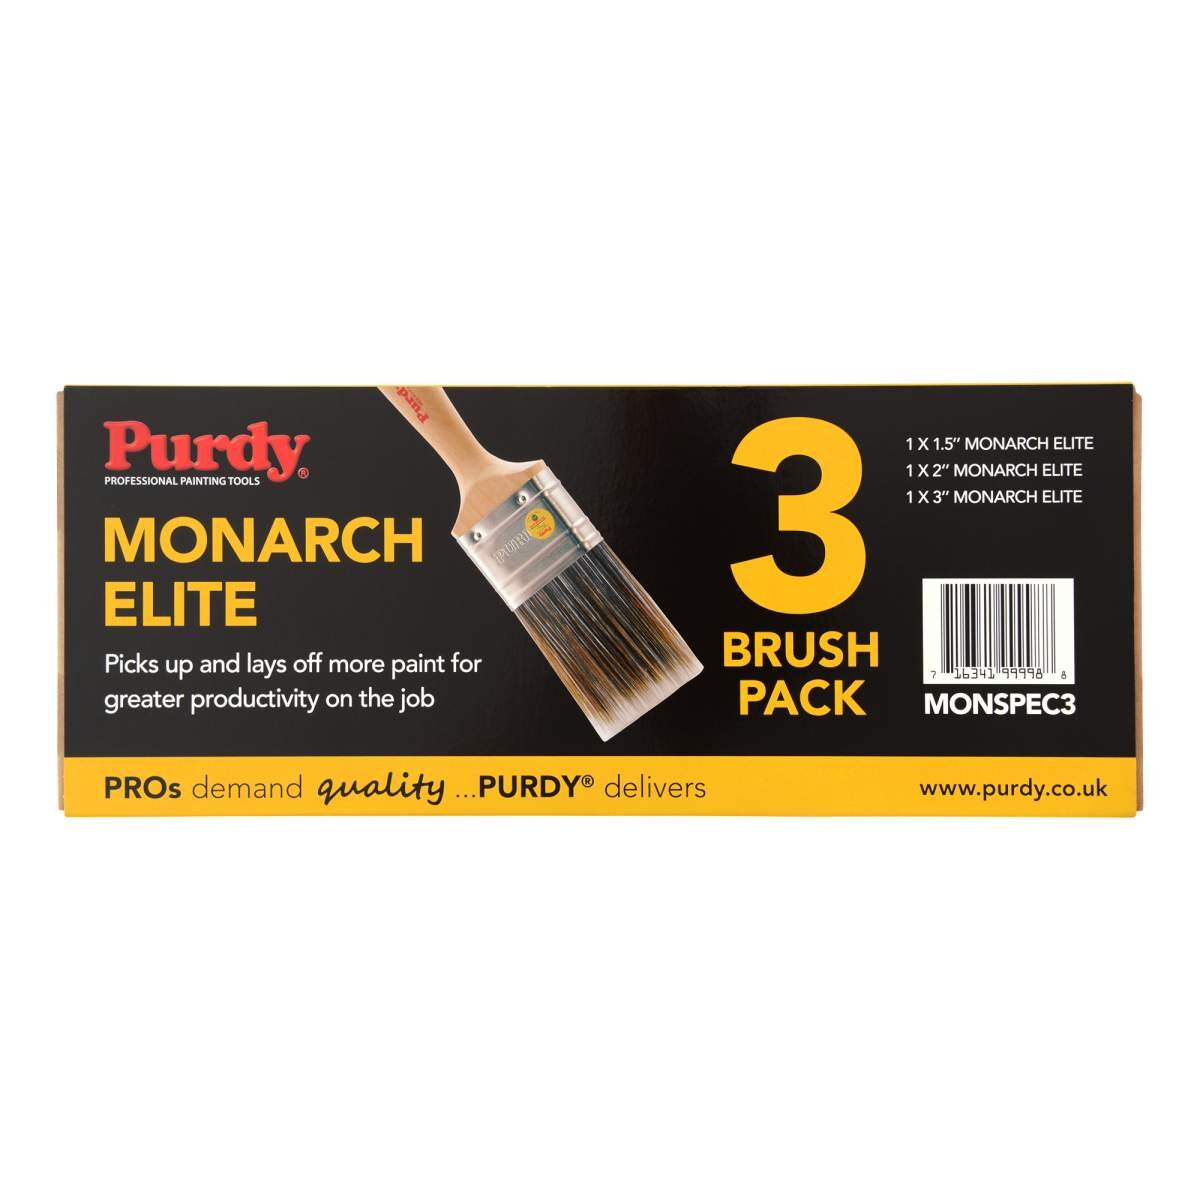 Purdy Monarch Elite Brush Set MONSPEC3 (1.5", 2" & 3")